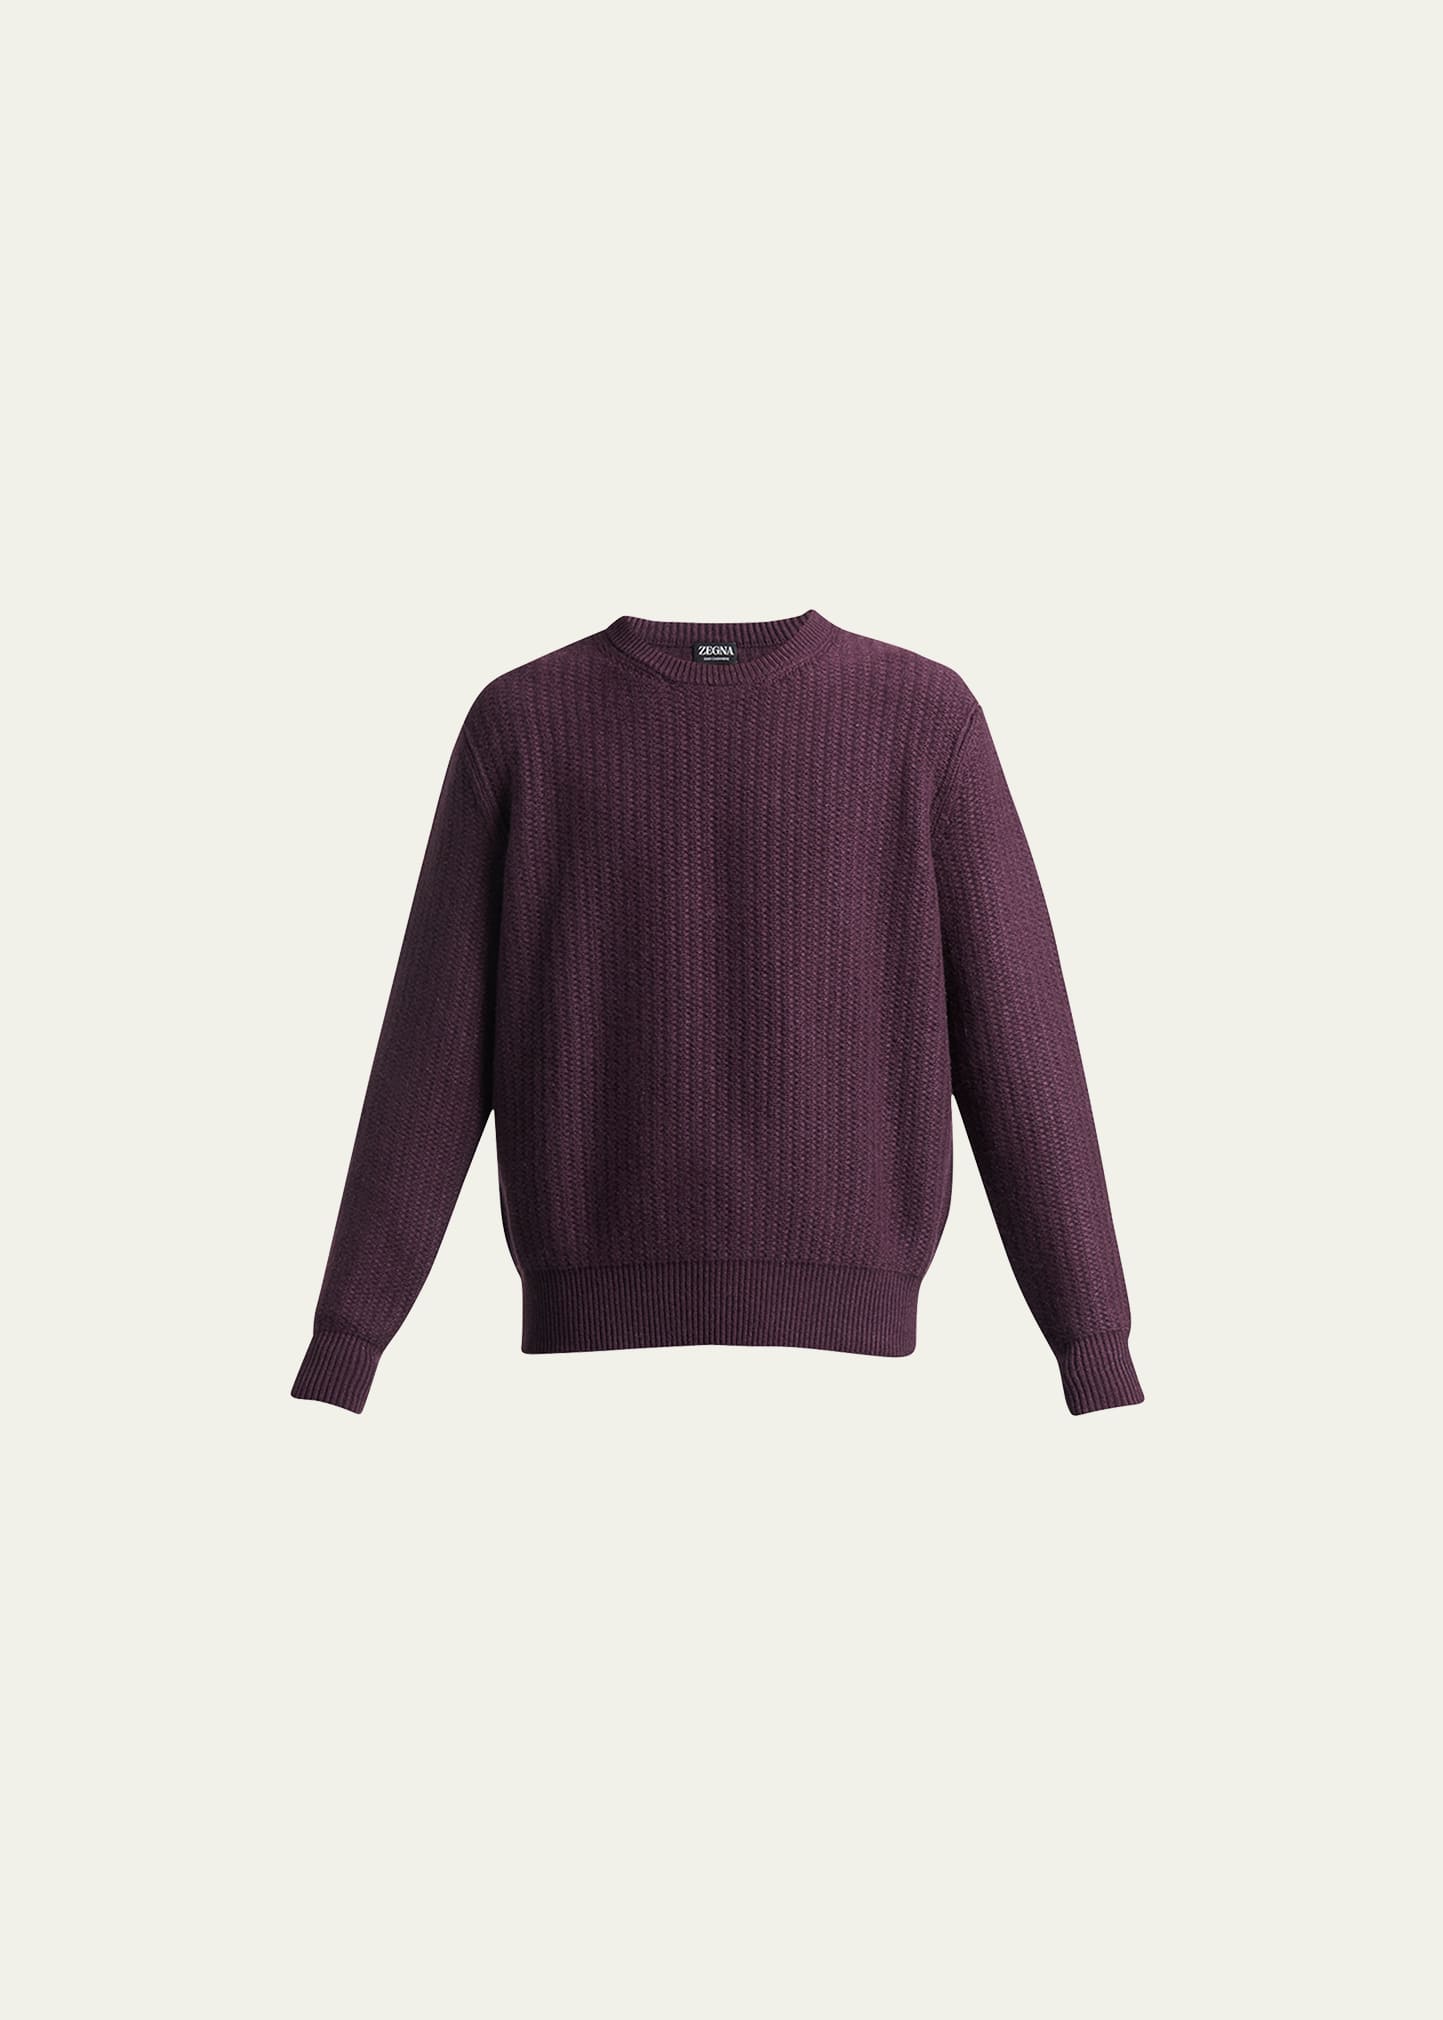 Zegna Men's Cashmere-knit Crewneck Sweater In Dk Prp Sld